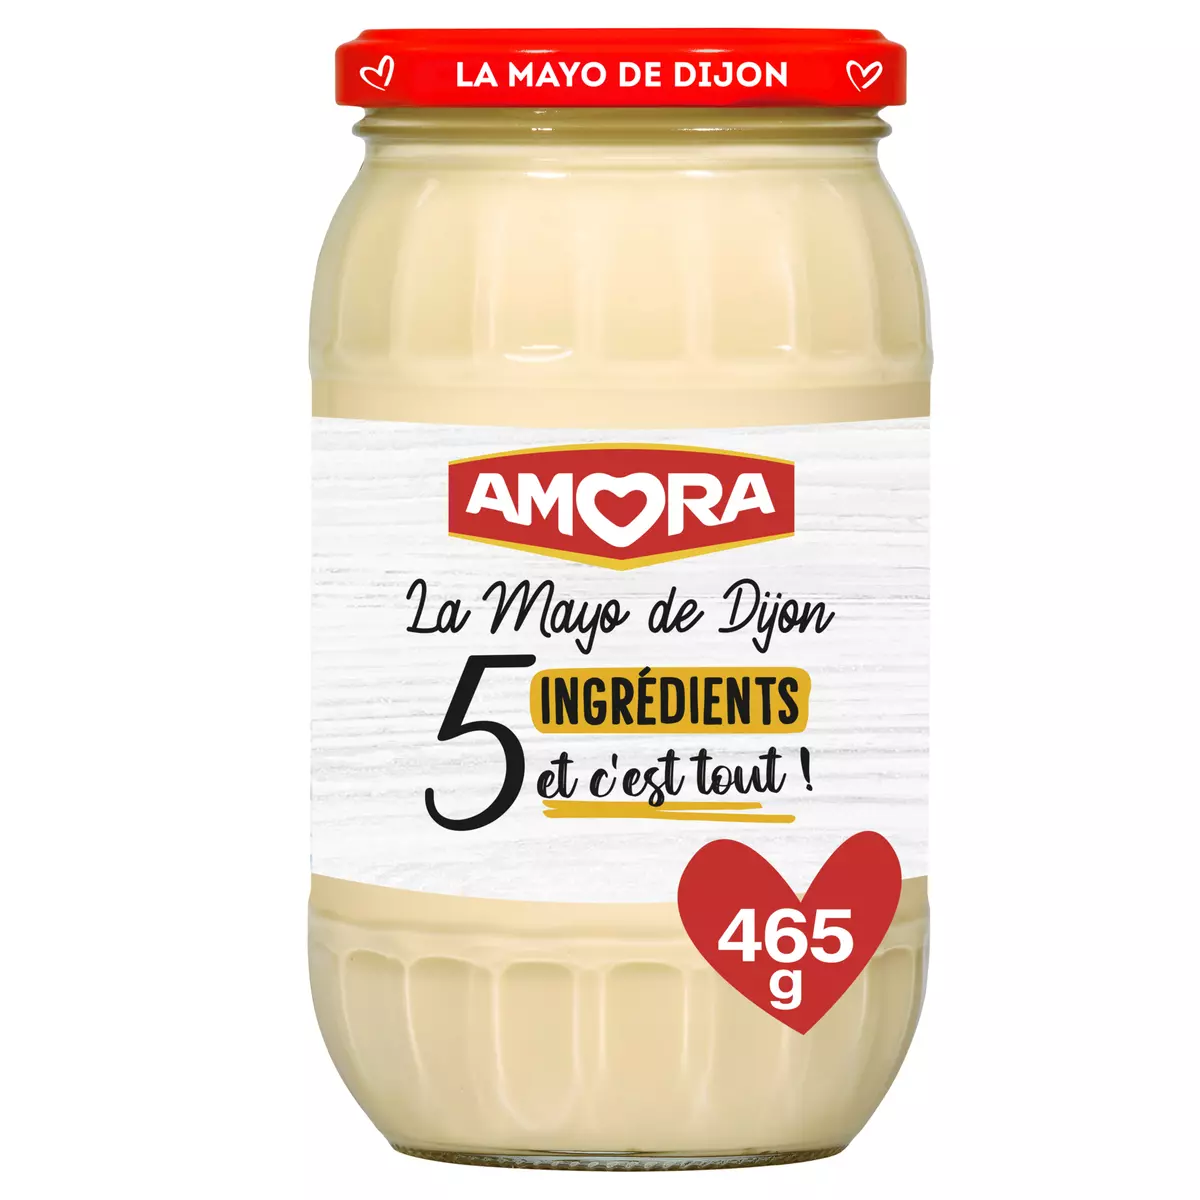 AMORA La Mayo de Dijon 5 ingrédients bocal 465g